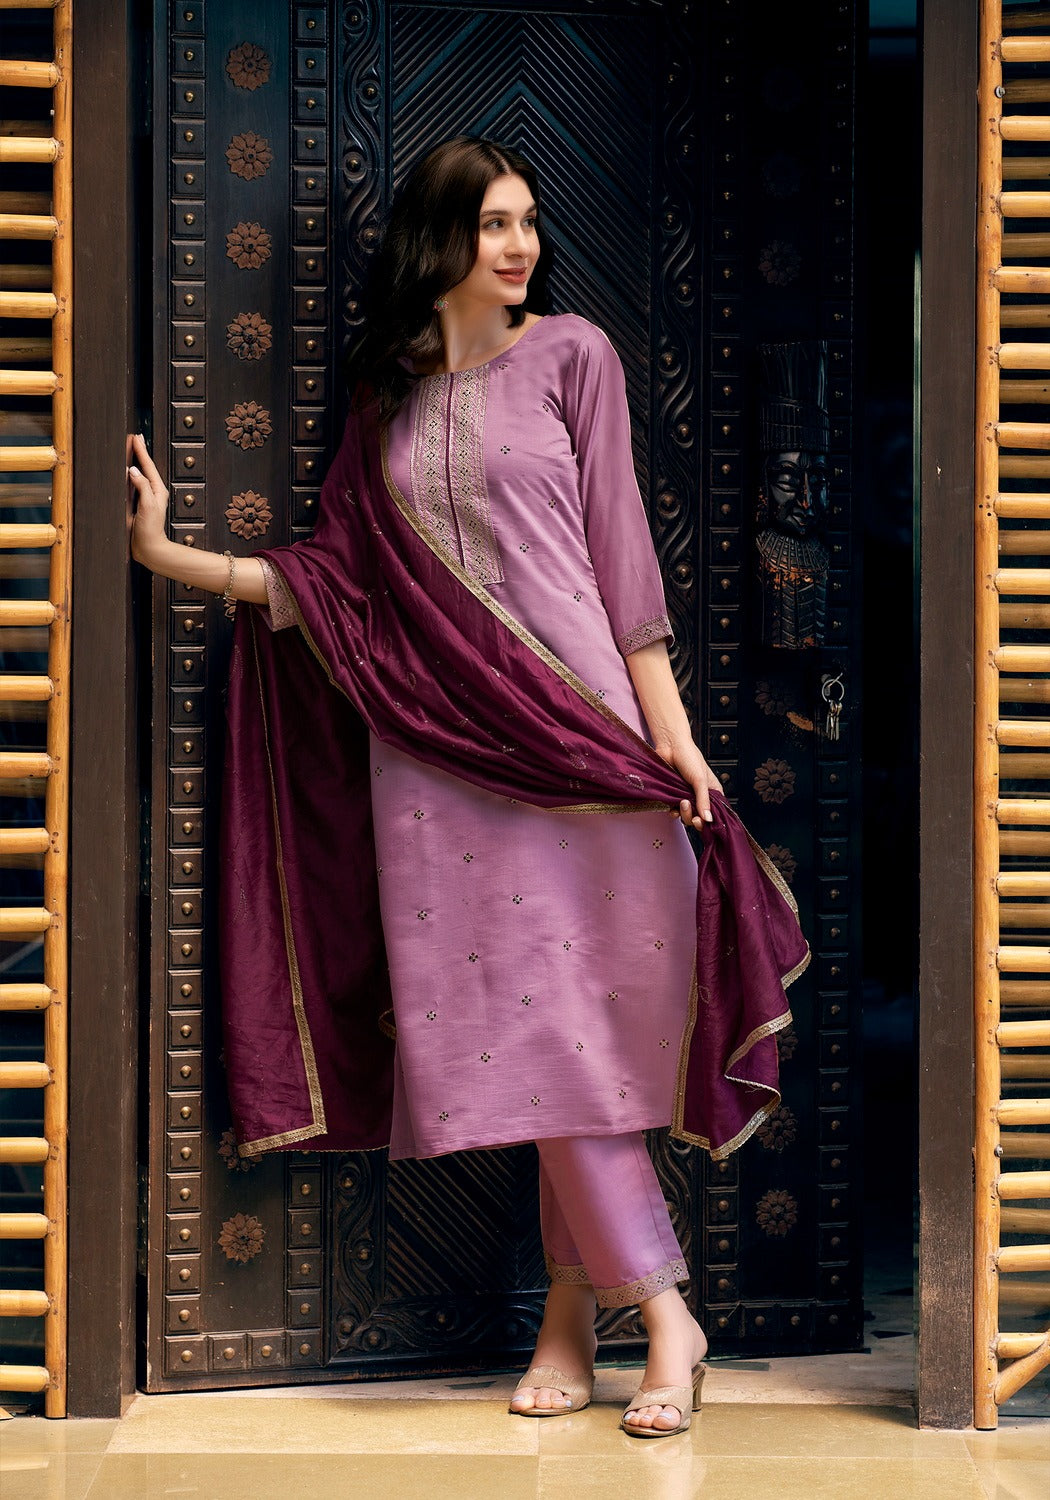 Fiza Vol 1-Vaniska Colour Pix Roman Silk Readymade Pant Style Suits Exporter India